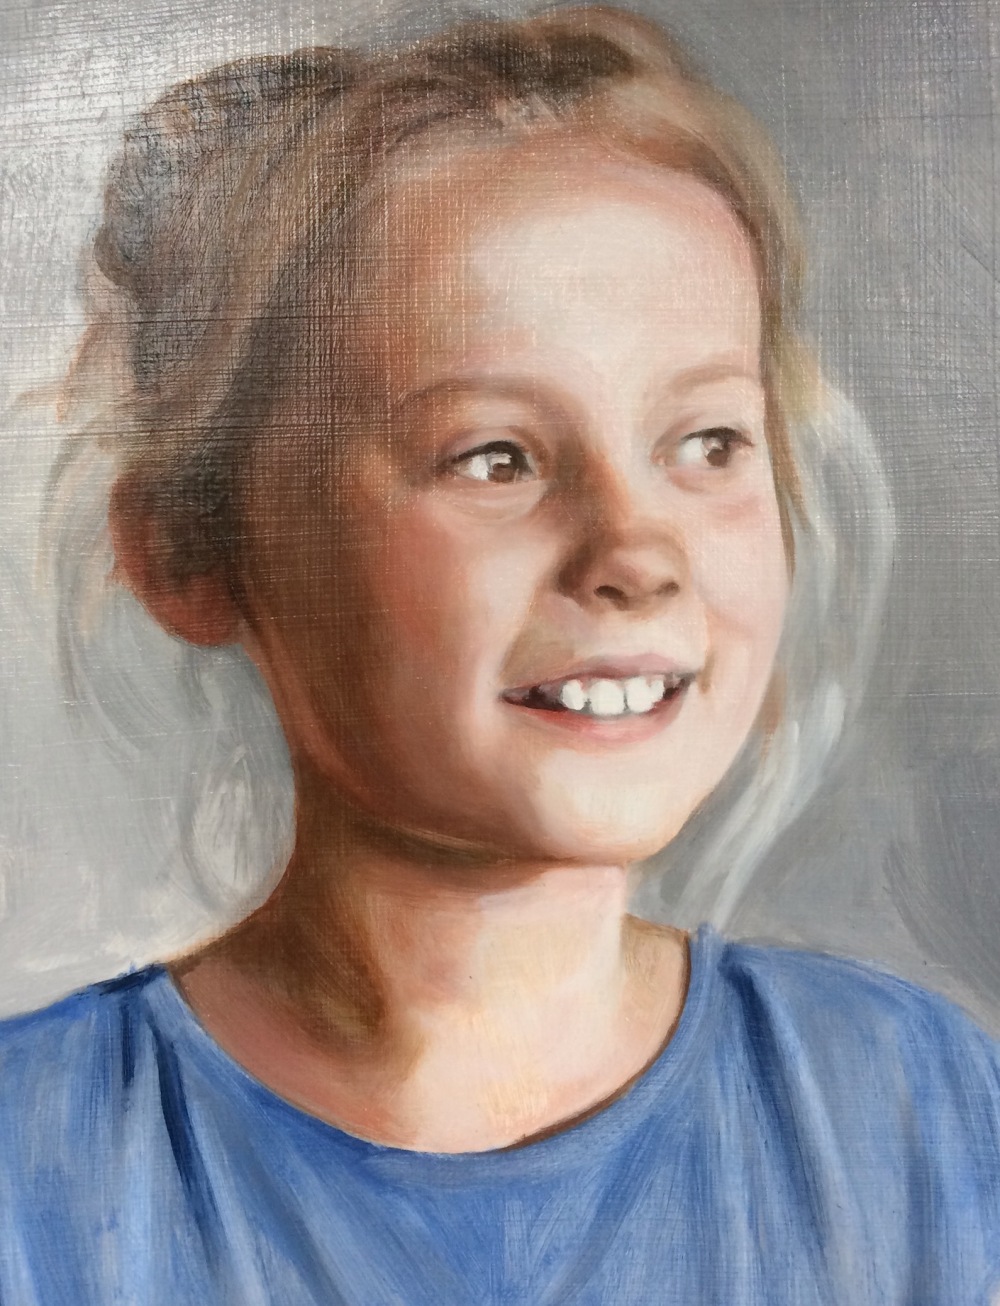 Second oil glaze on a commissioned portrait painting by British portrait painter and artist Matt Harvey